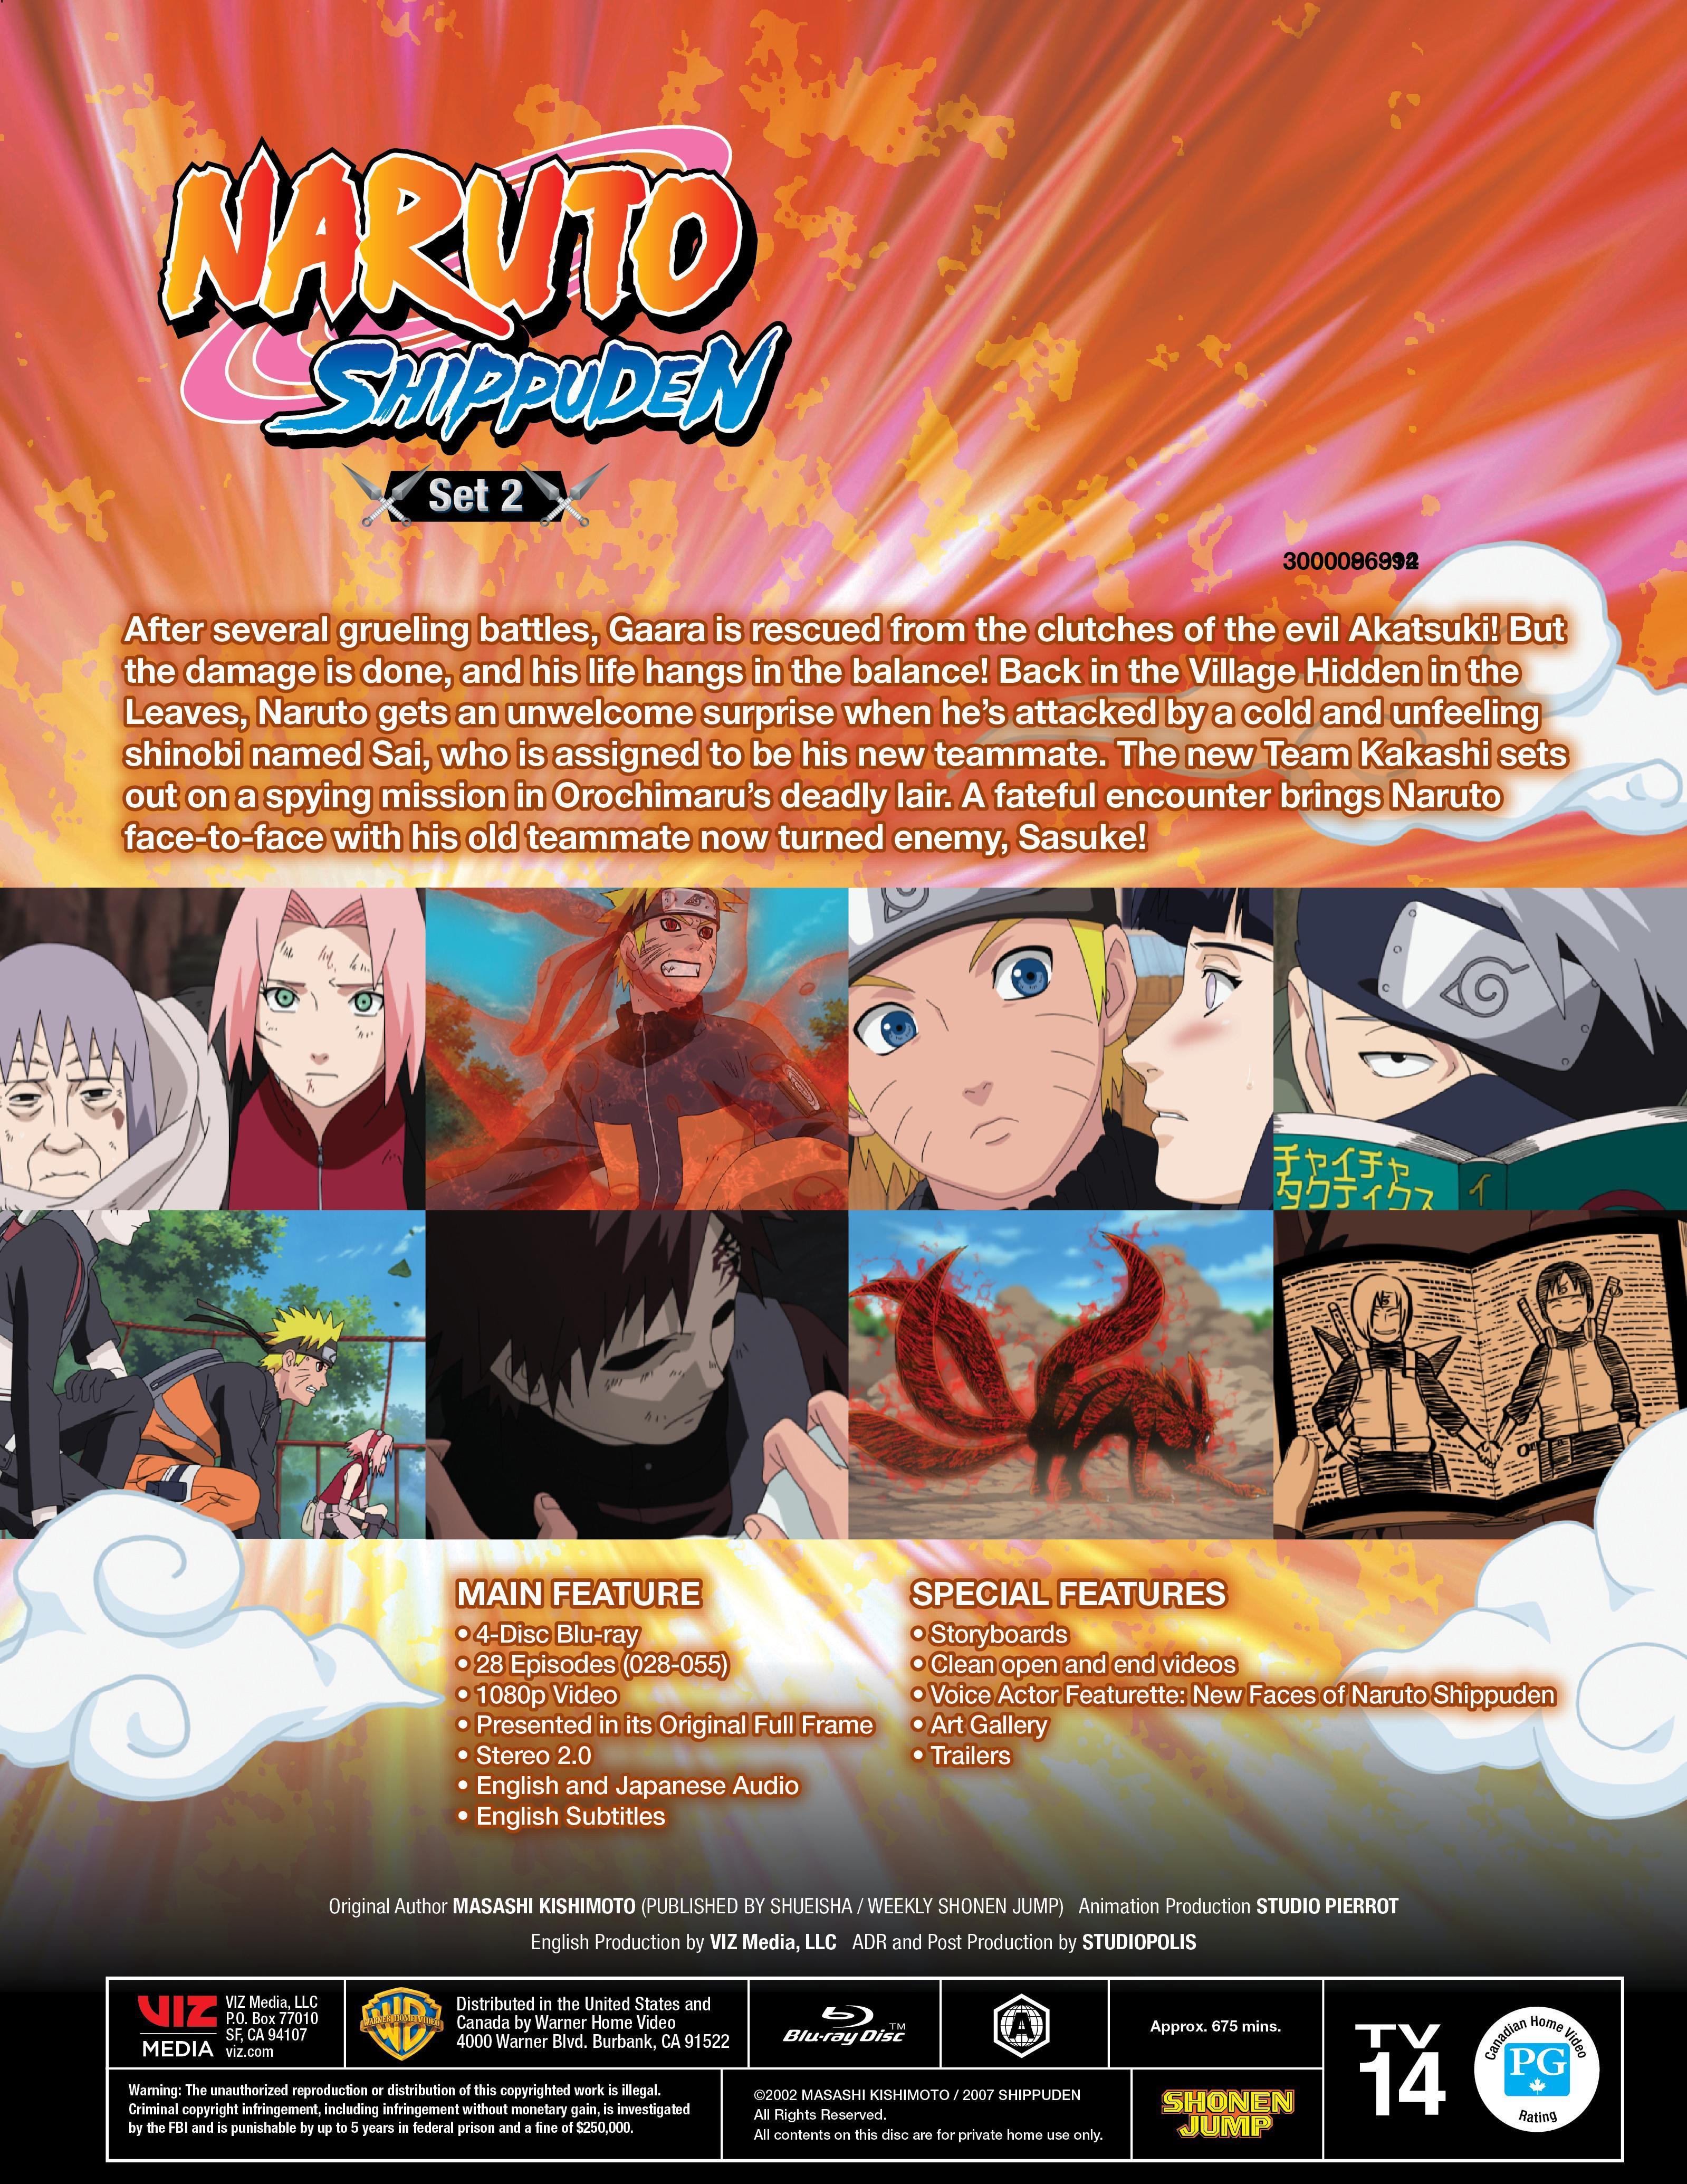 Naruto Shippuuden DVD-Cover + Label (Vol.2) by Pharuk on DeviantArt